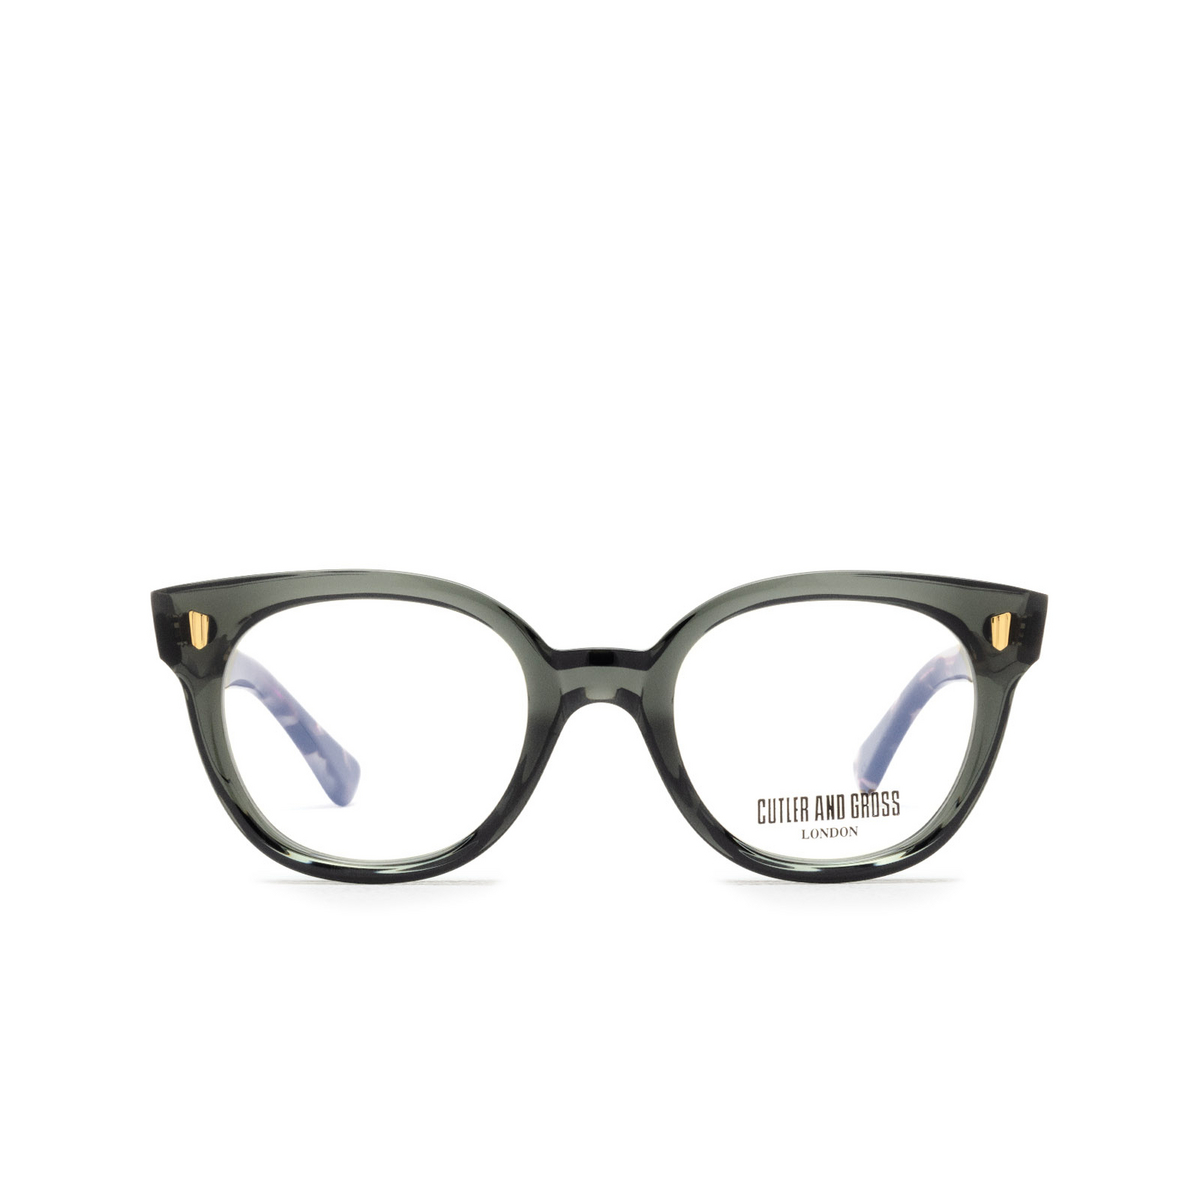 Cutler and Gross 9298 Eyeglasses 04 Aviator Blue - front view